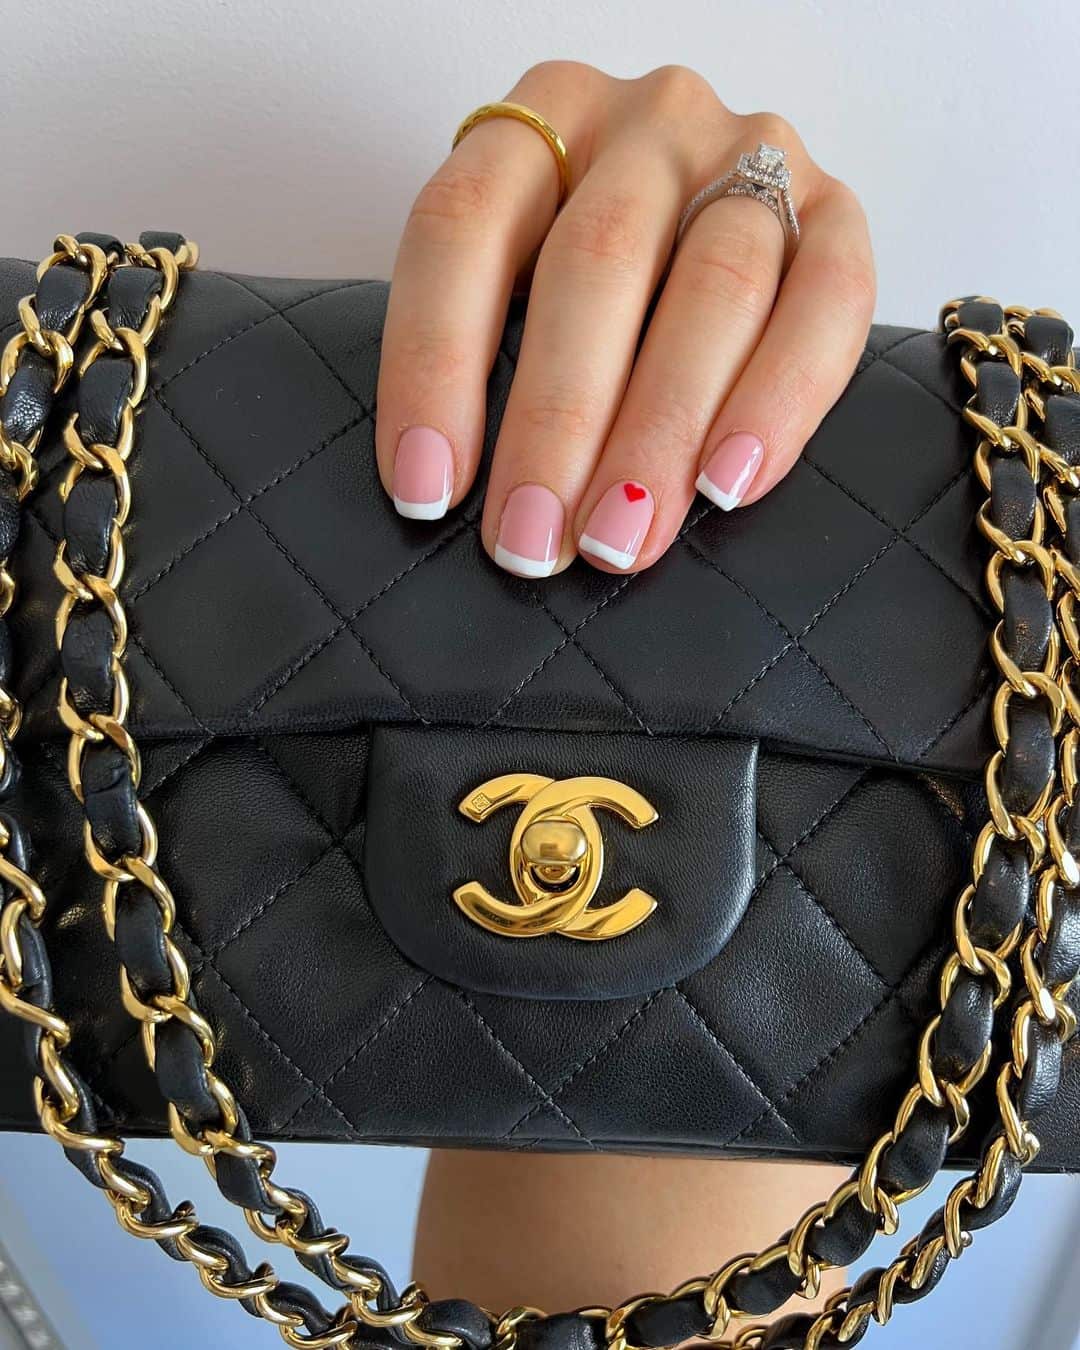 Closeup of the Chanel Flap Bag